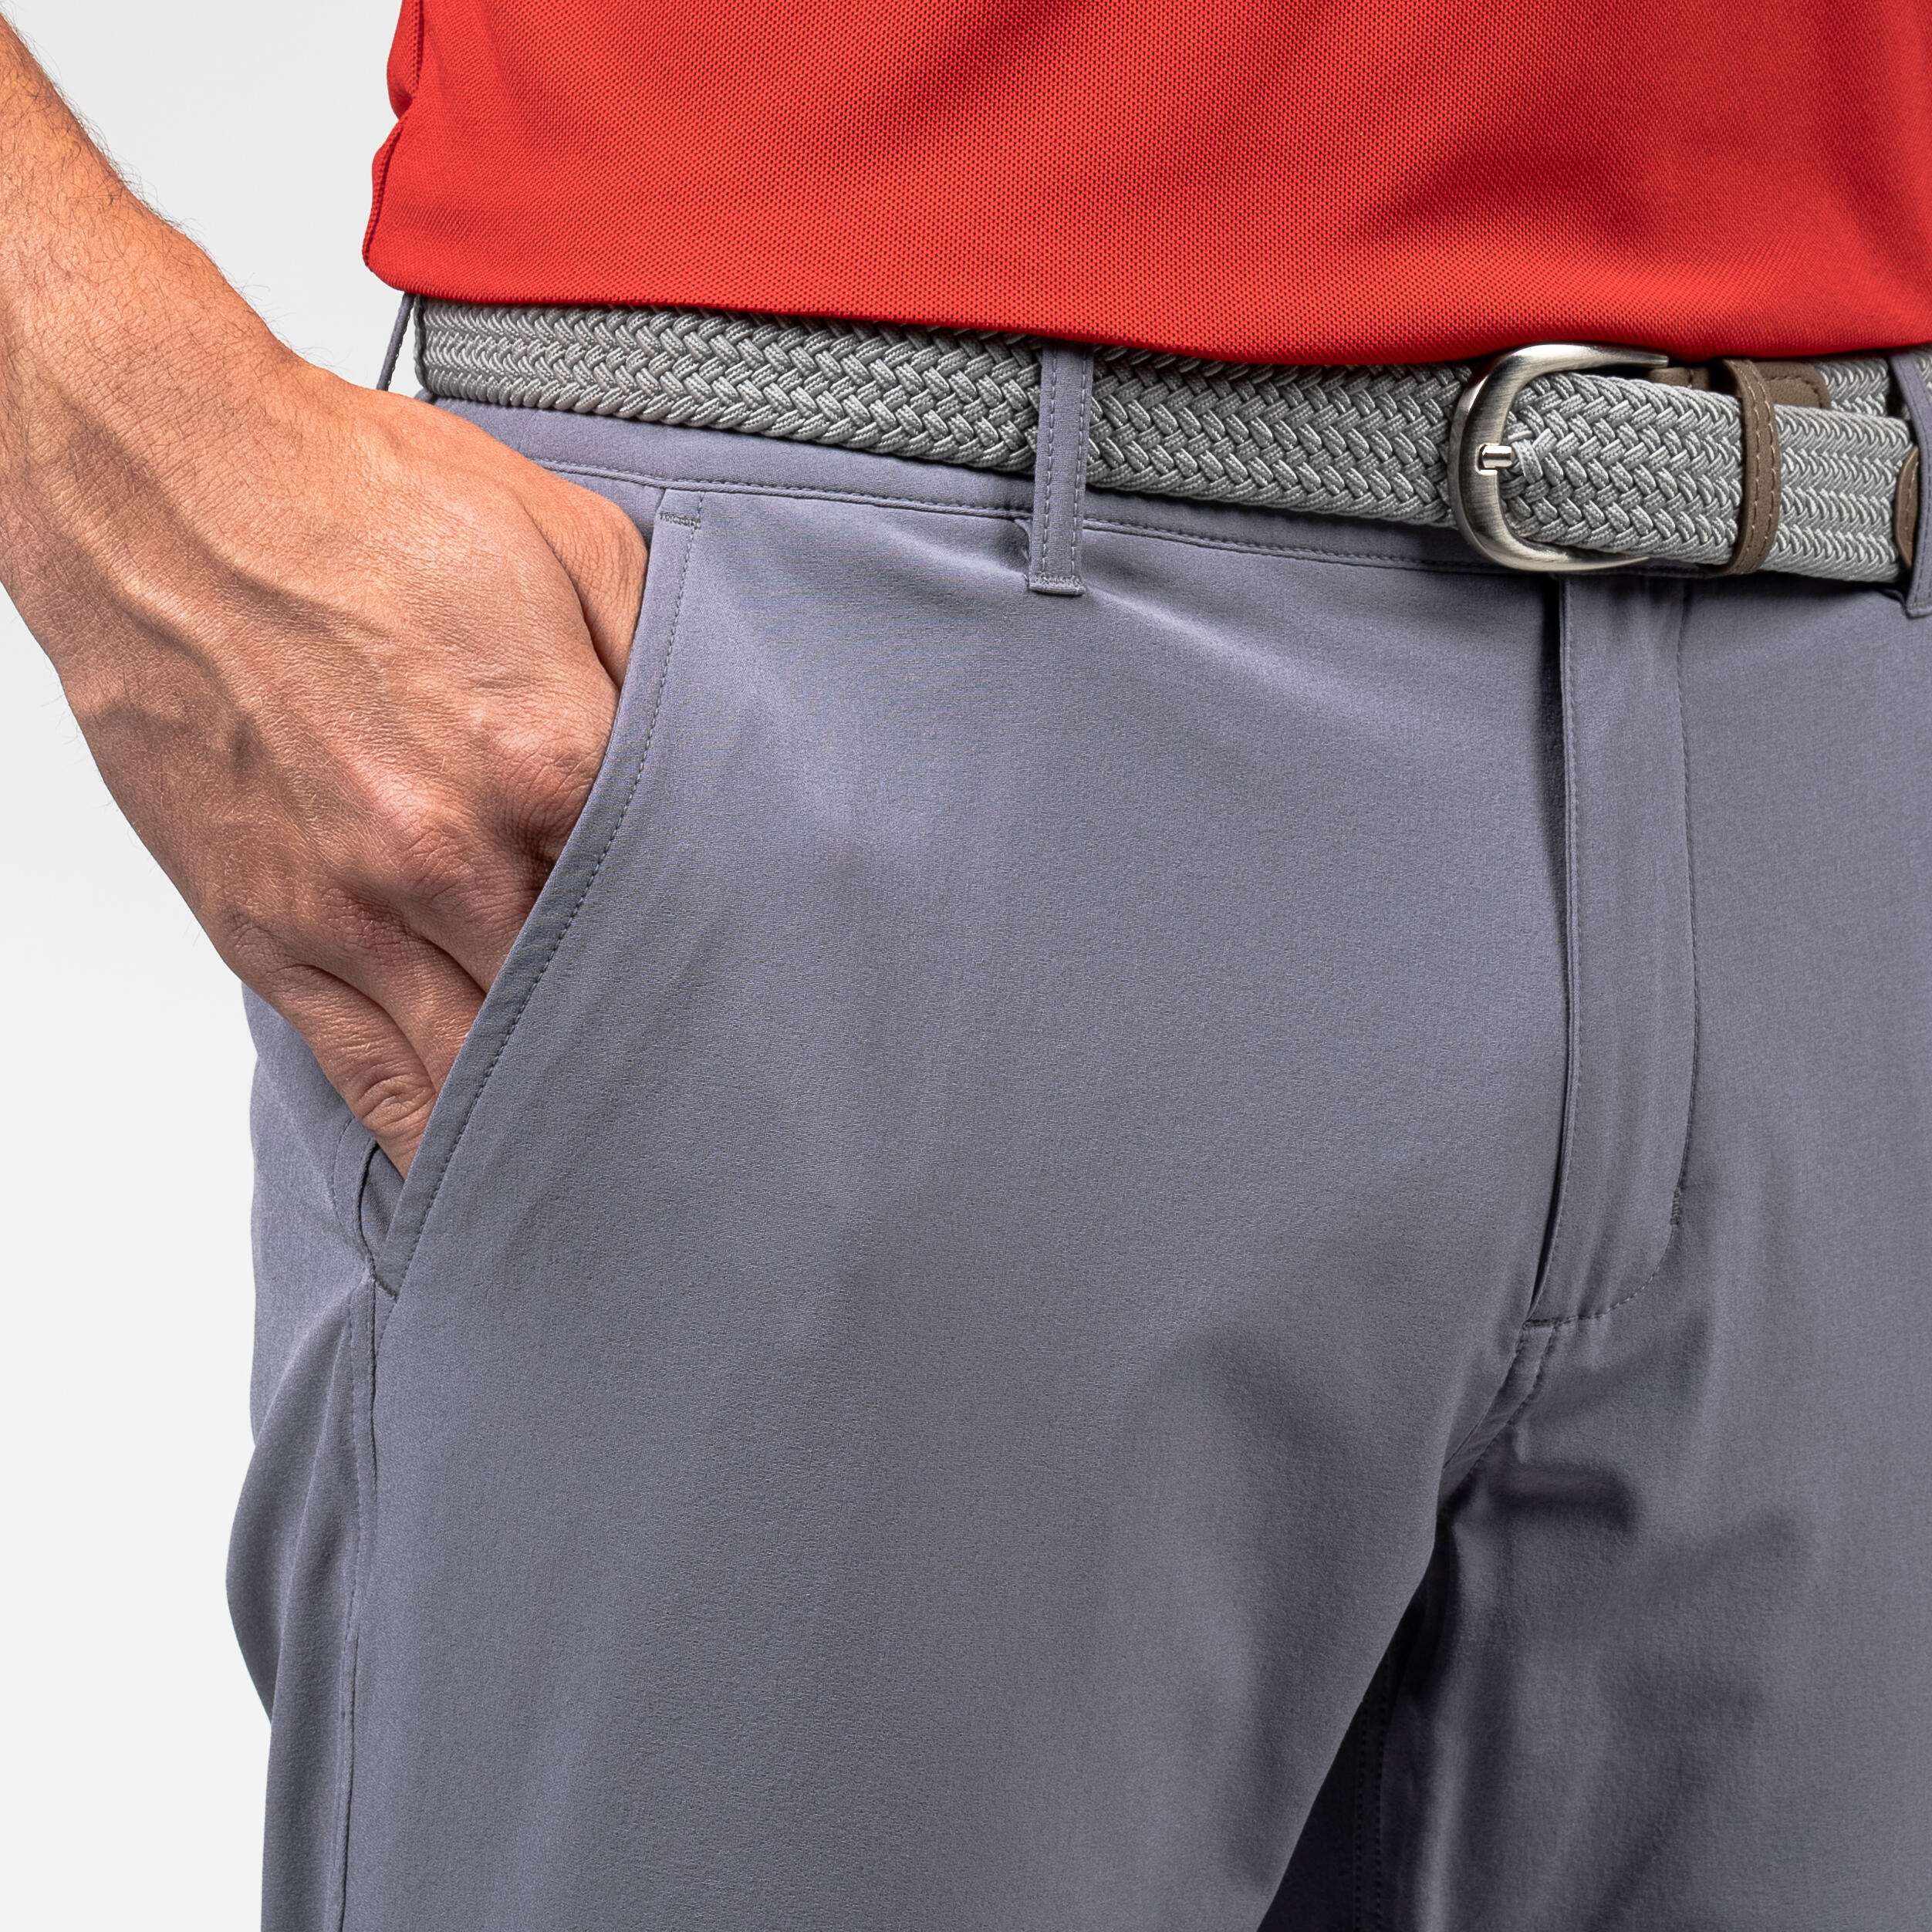 Men's Golf Trousers - Blue